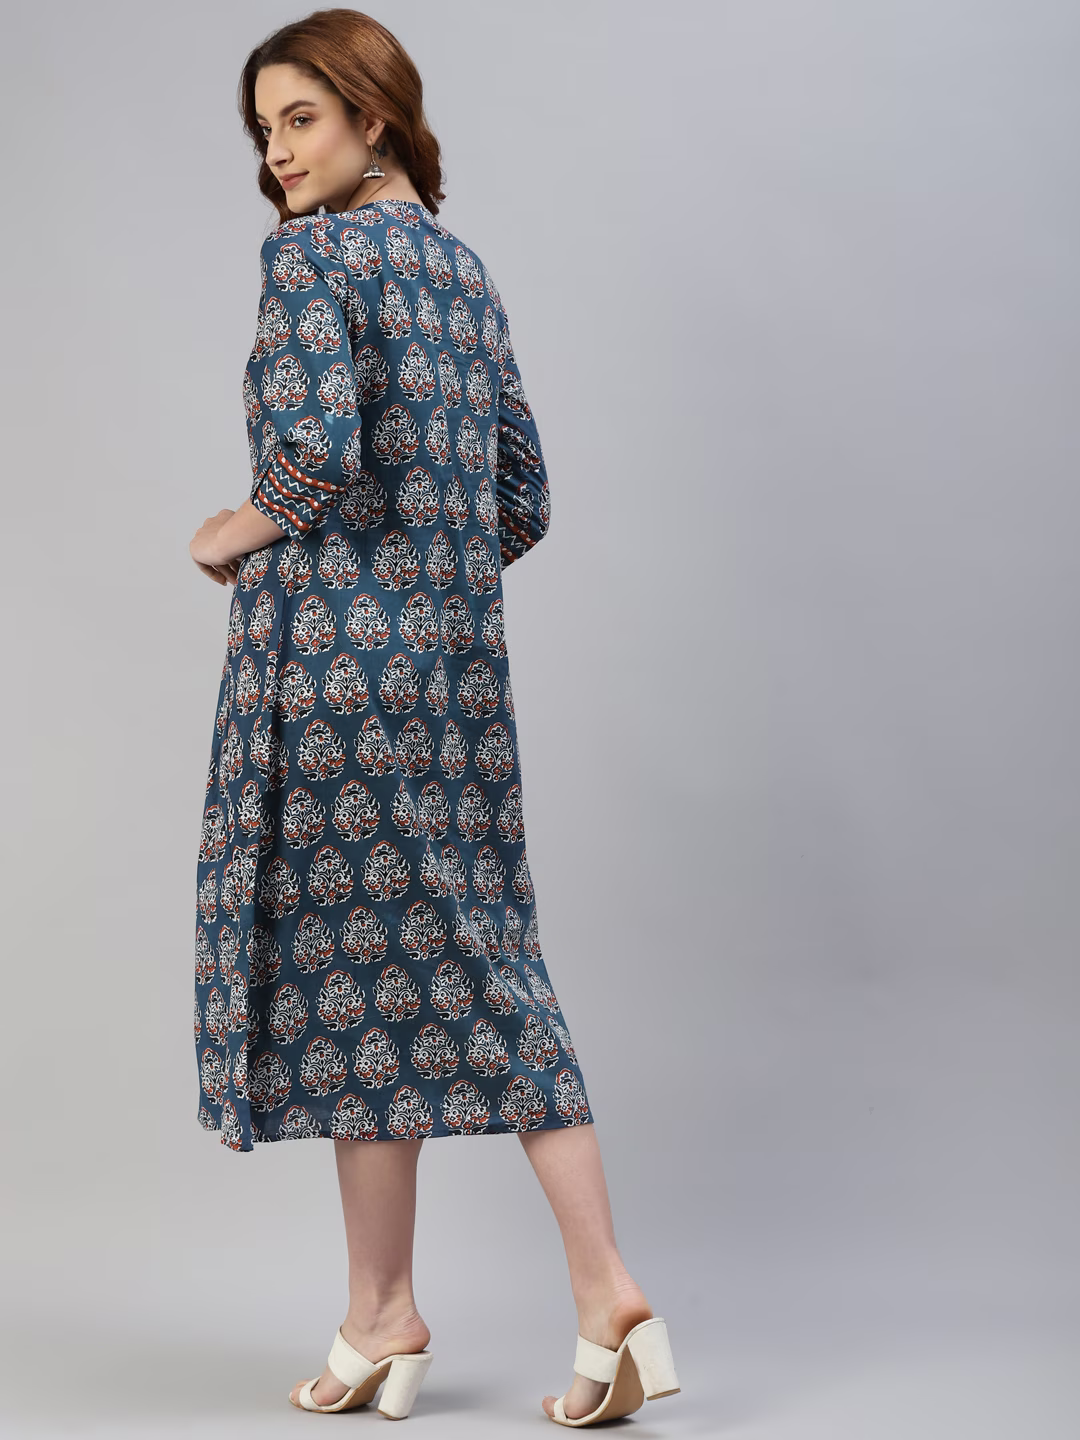 Women Teal Blue & White Ethnic Motifs Printed A-Line Midi Dress